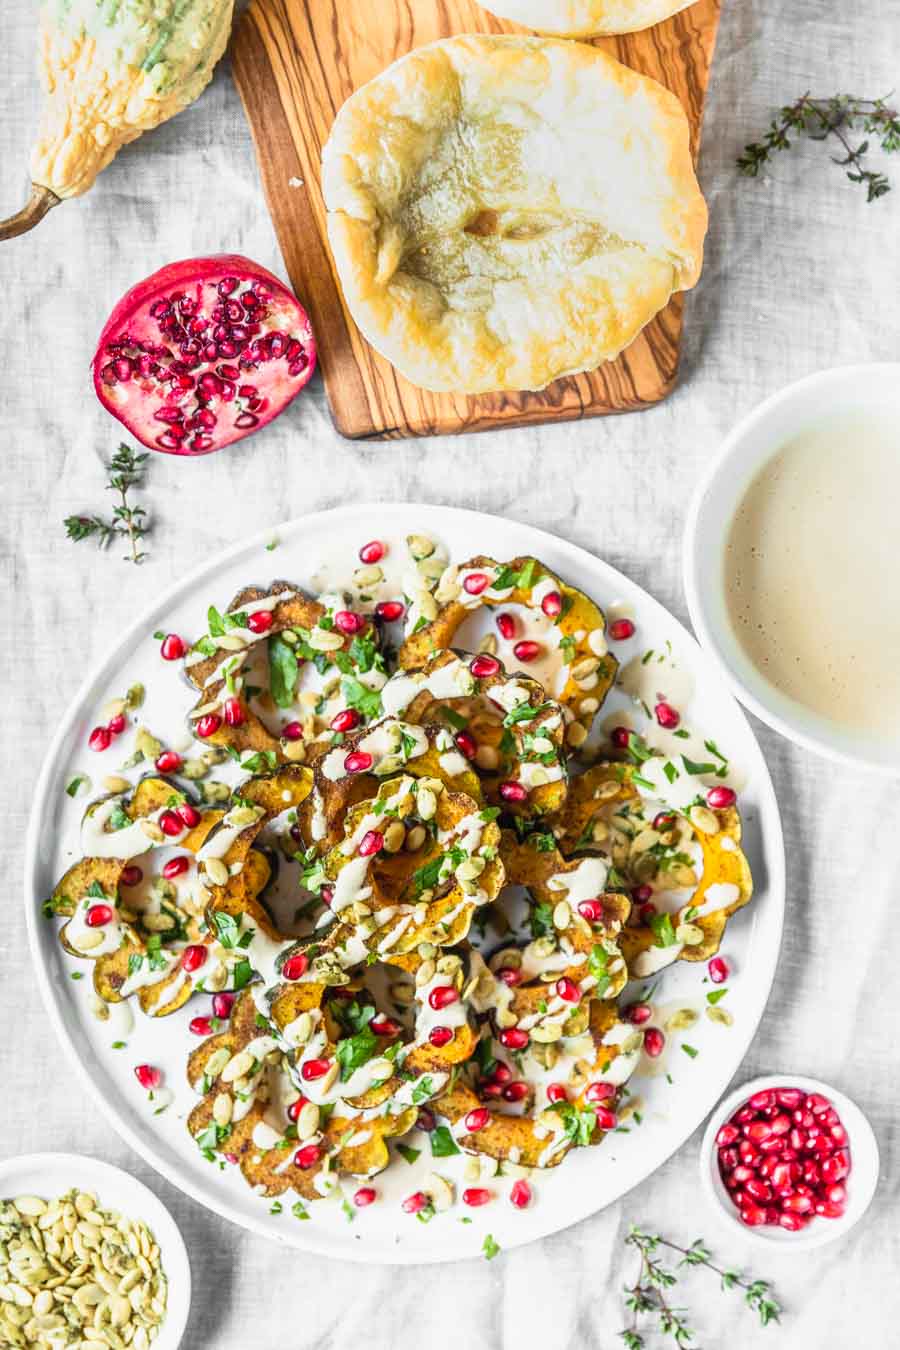 Garam Masala Roasted Acorn Squash recipe from The Ultimate Vegan Cookbook, Photo by Kari of Beautiful Ingredient. #vegan #gluten-free #thanksgiving #holiday #squash #pomegranate #tahini